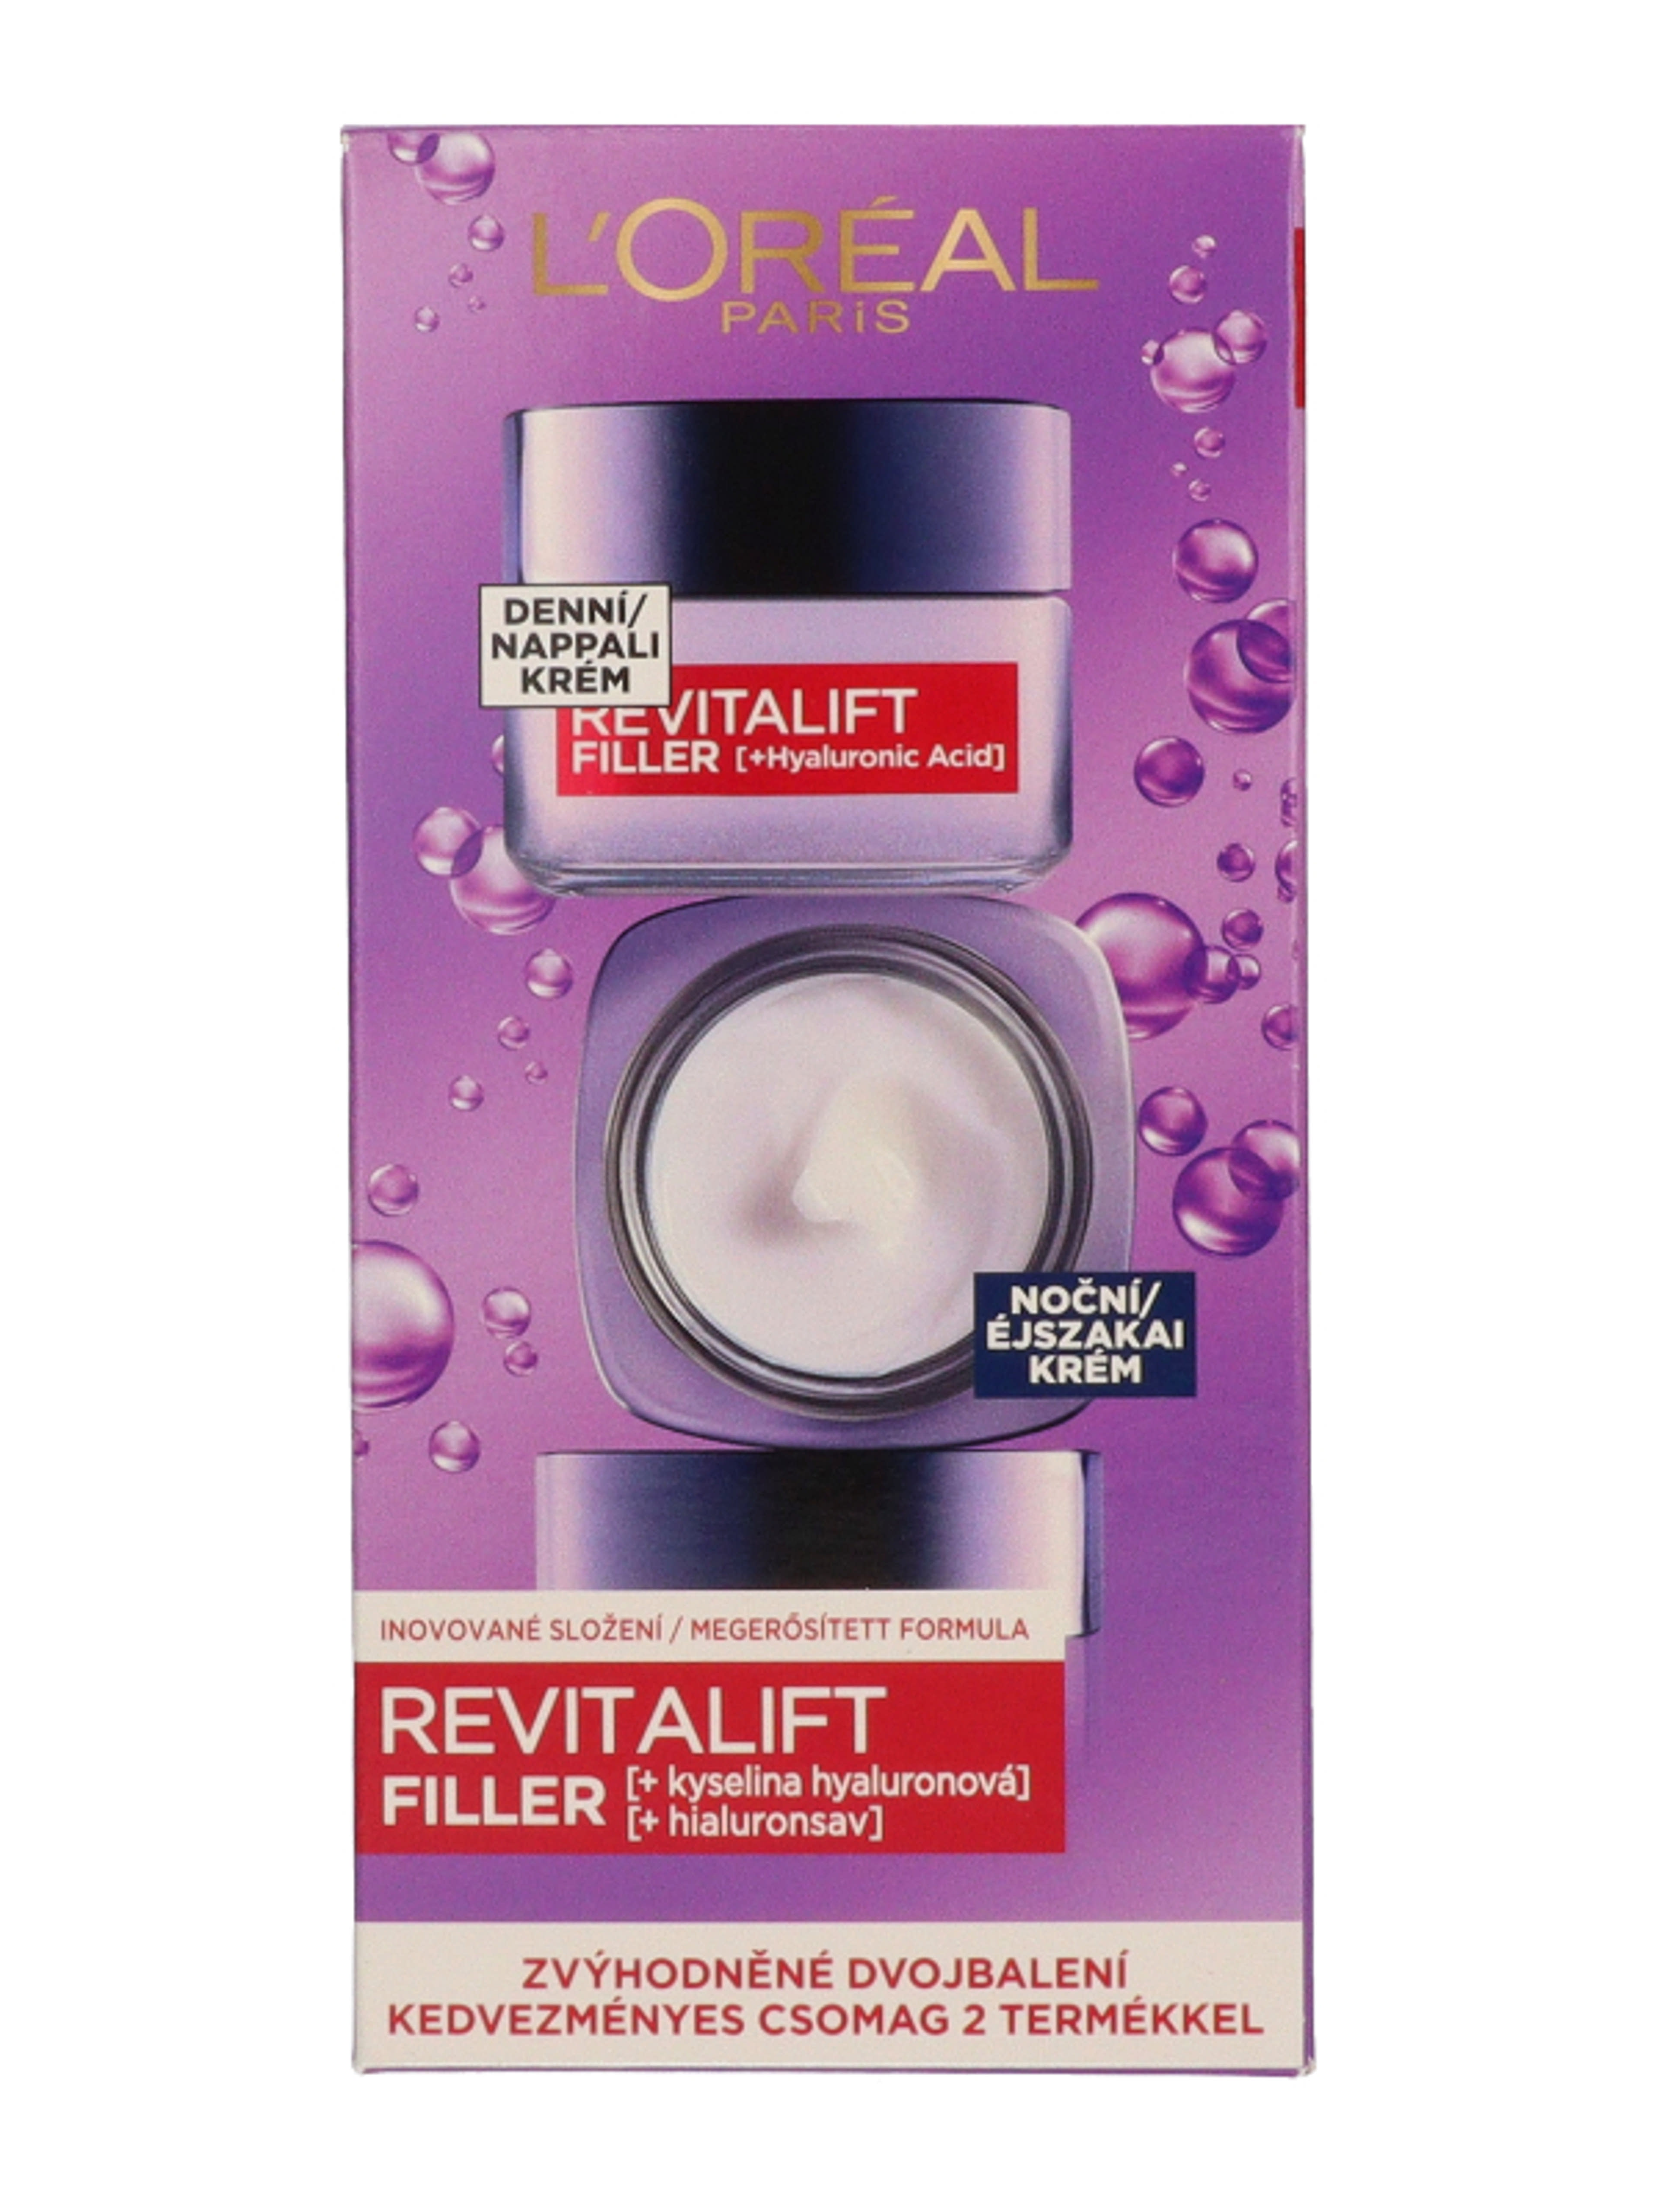 L'Oréal Paris Revitalift Filler arckrém dupack 2x50 ml - 100 ml-2